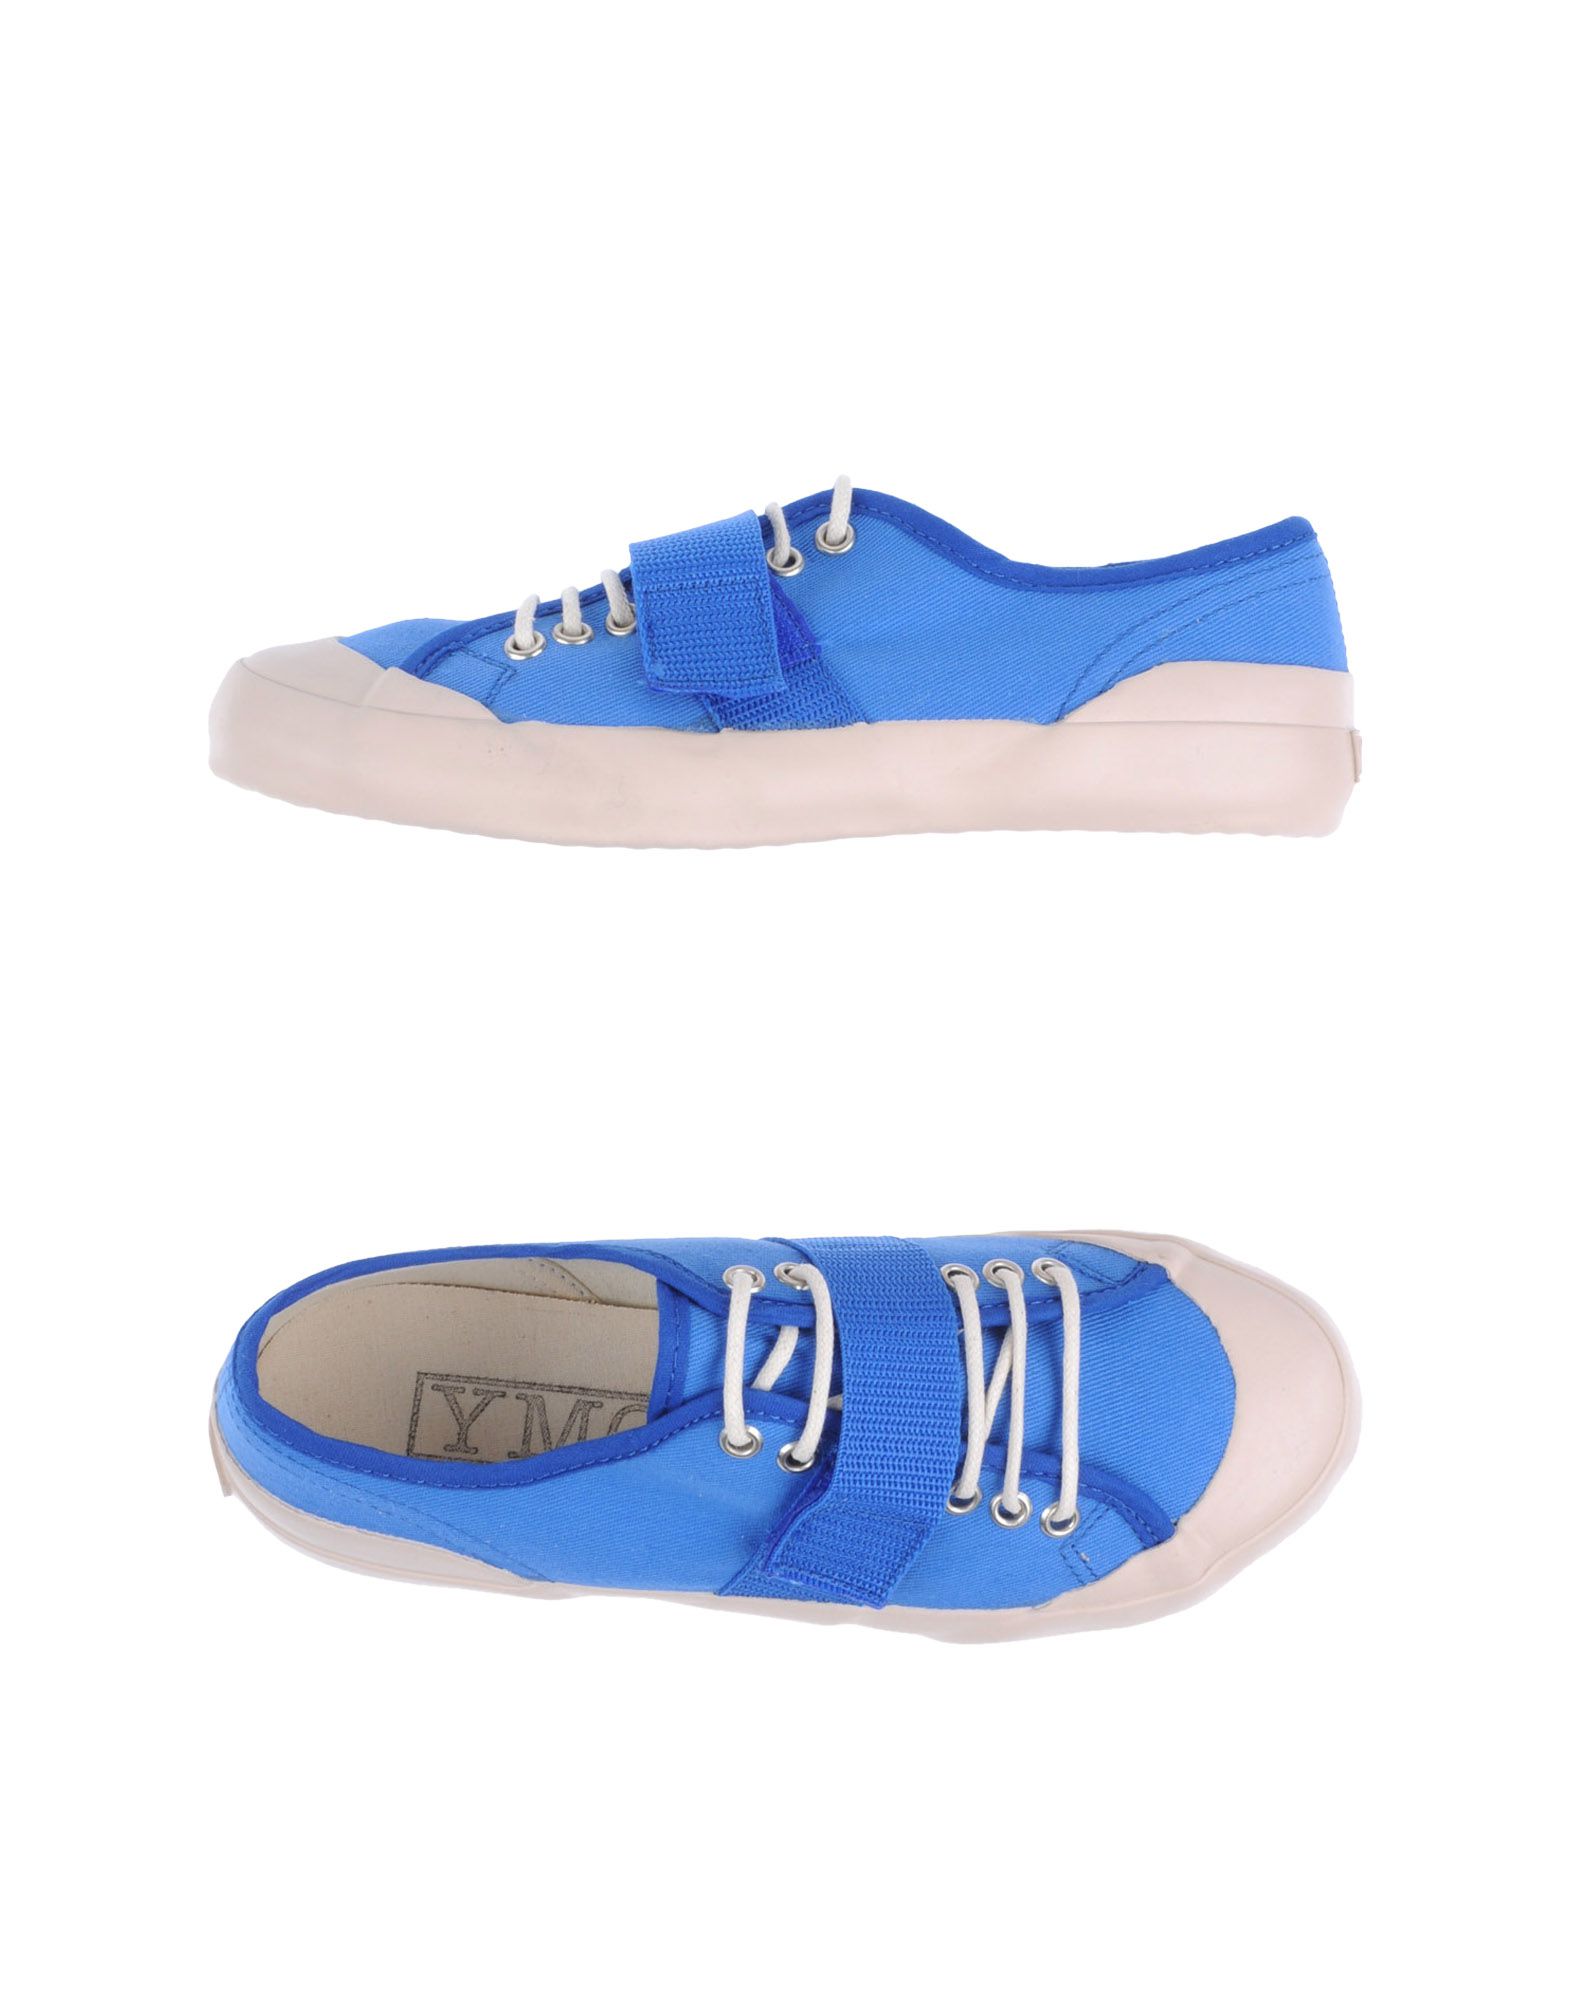 Foto Ymc You Must Create Sneakers Mujer Azul pastel foto 648163